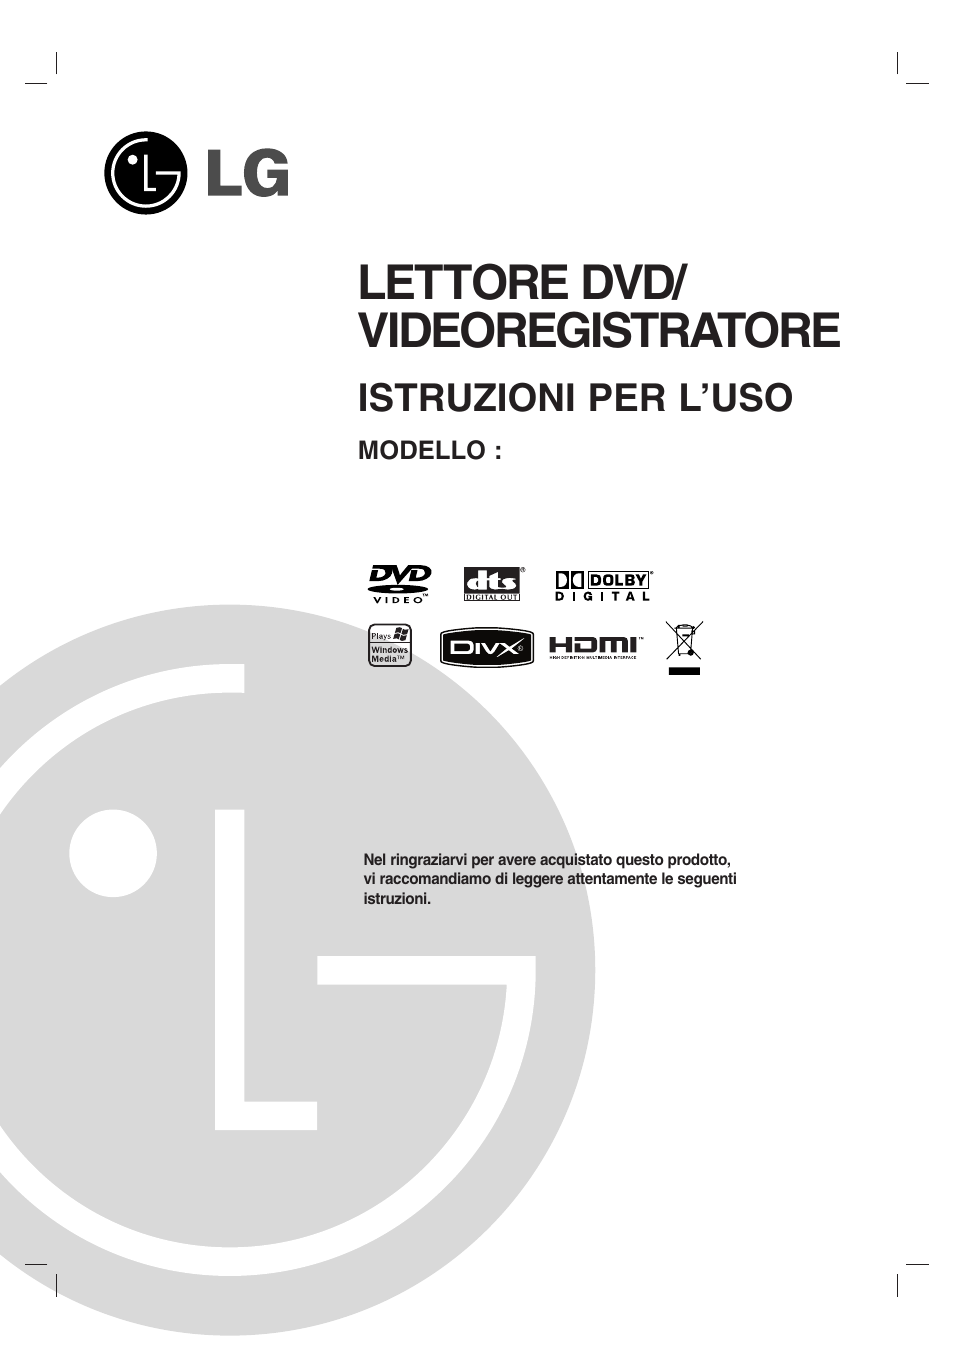 LG V390H Manuale d'uso | Pagine: 37